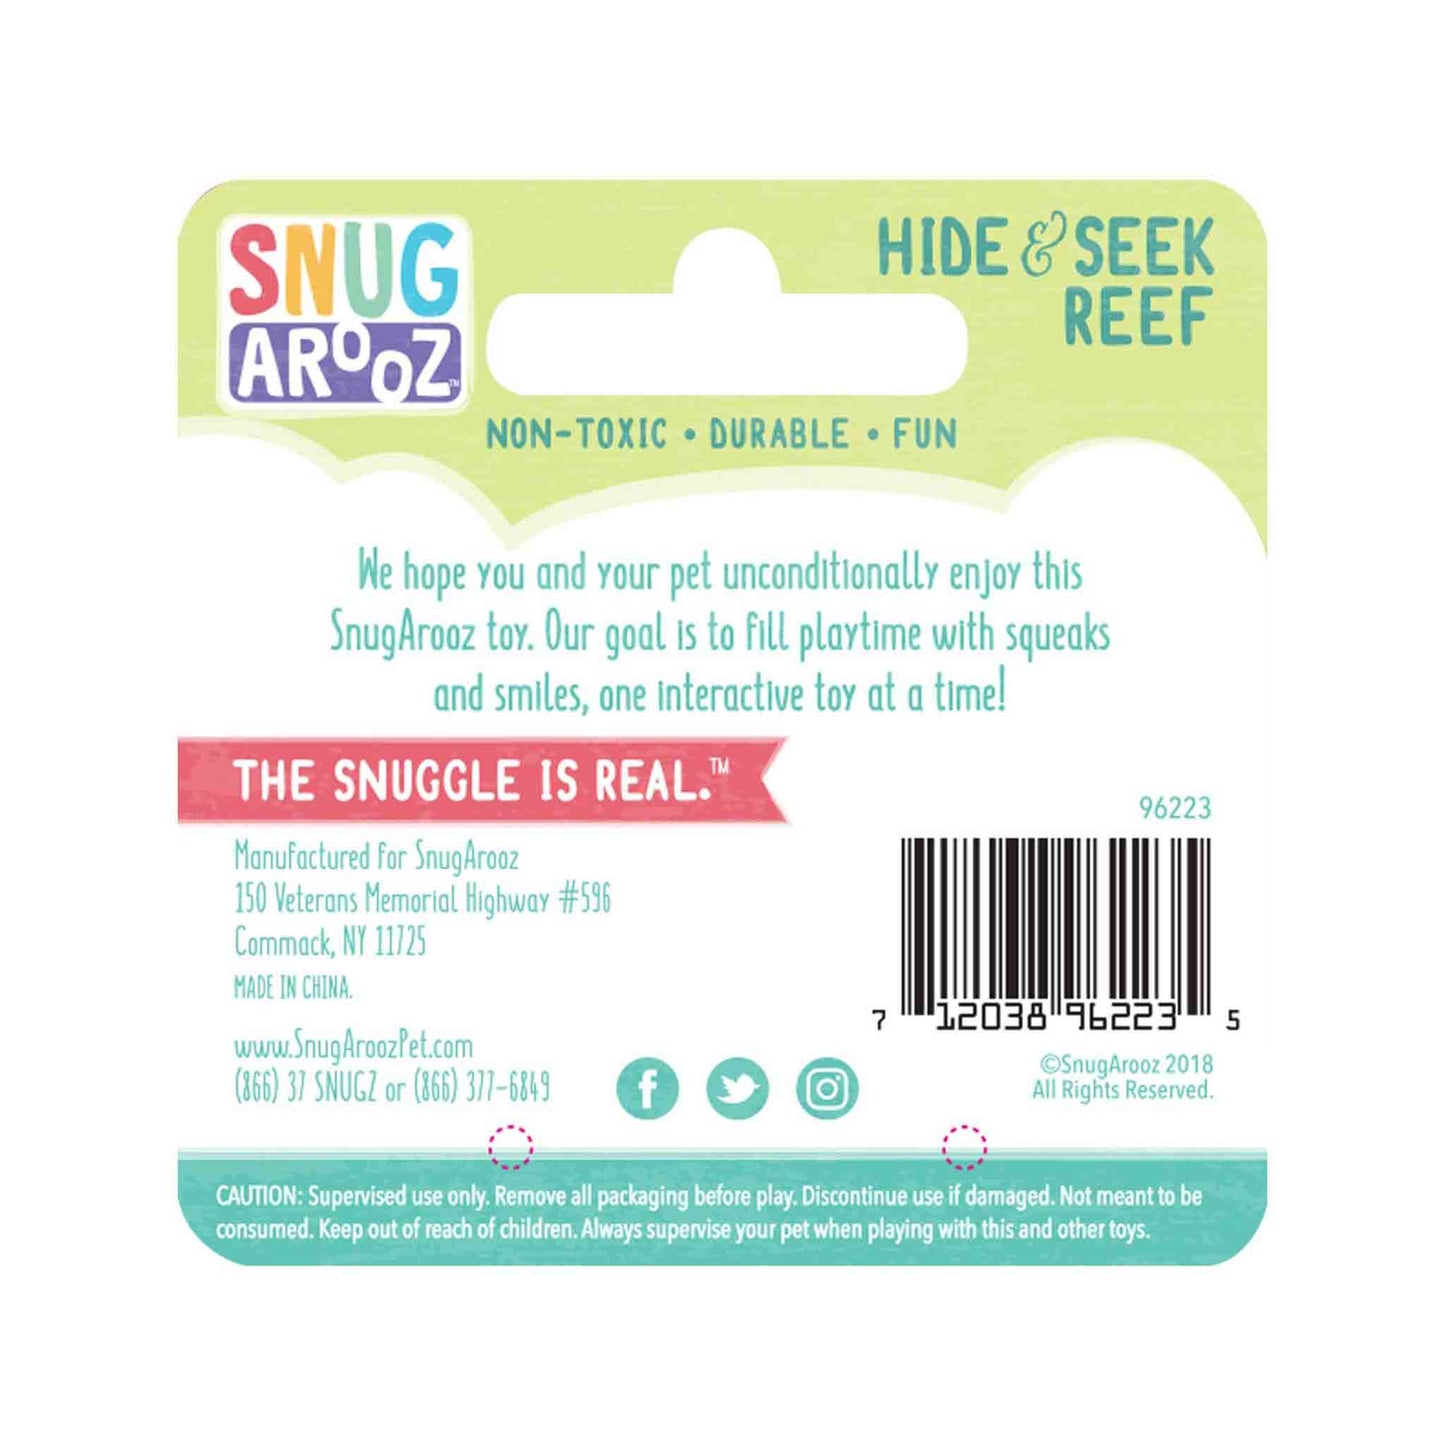 Hide and Seek Reef Dog Toy information on packaging